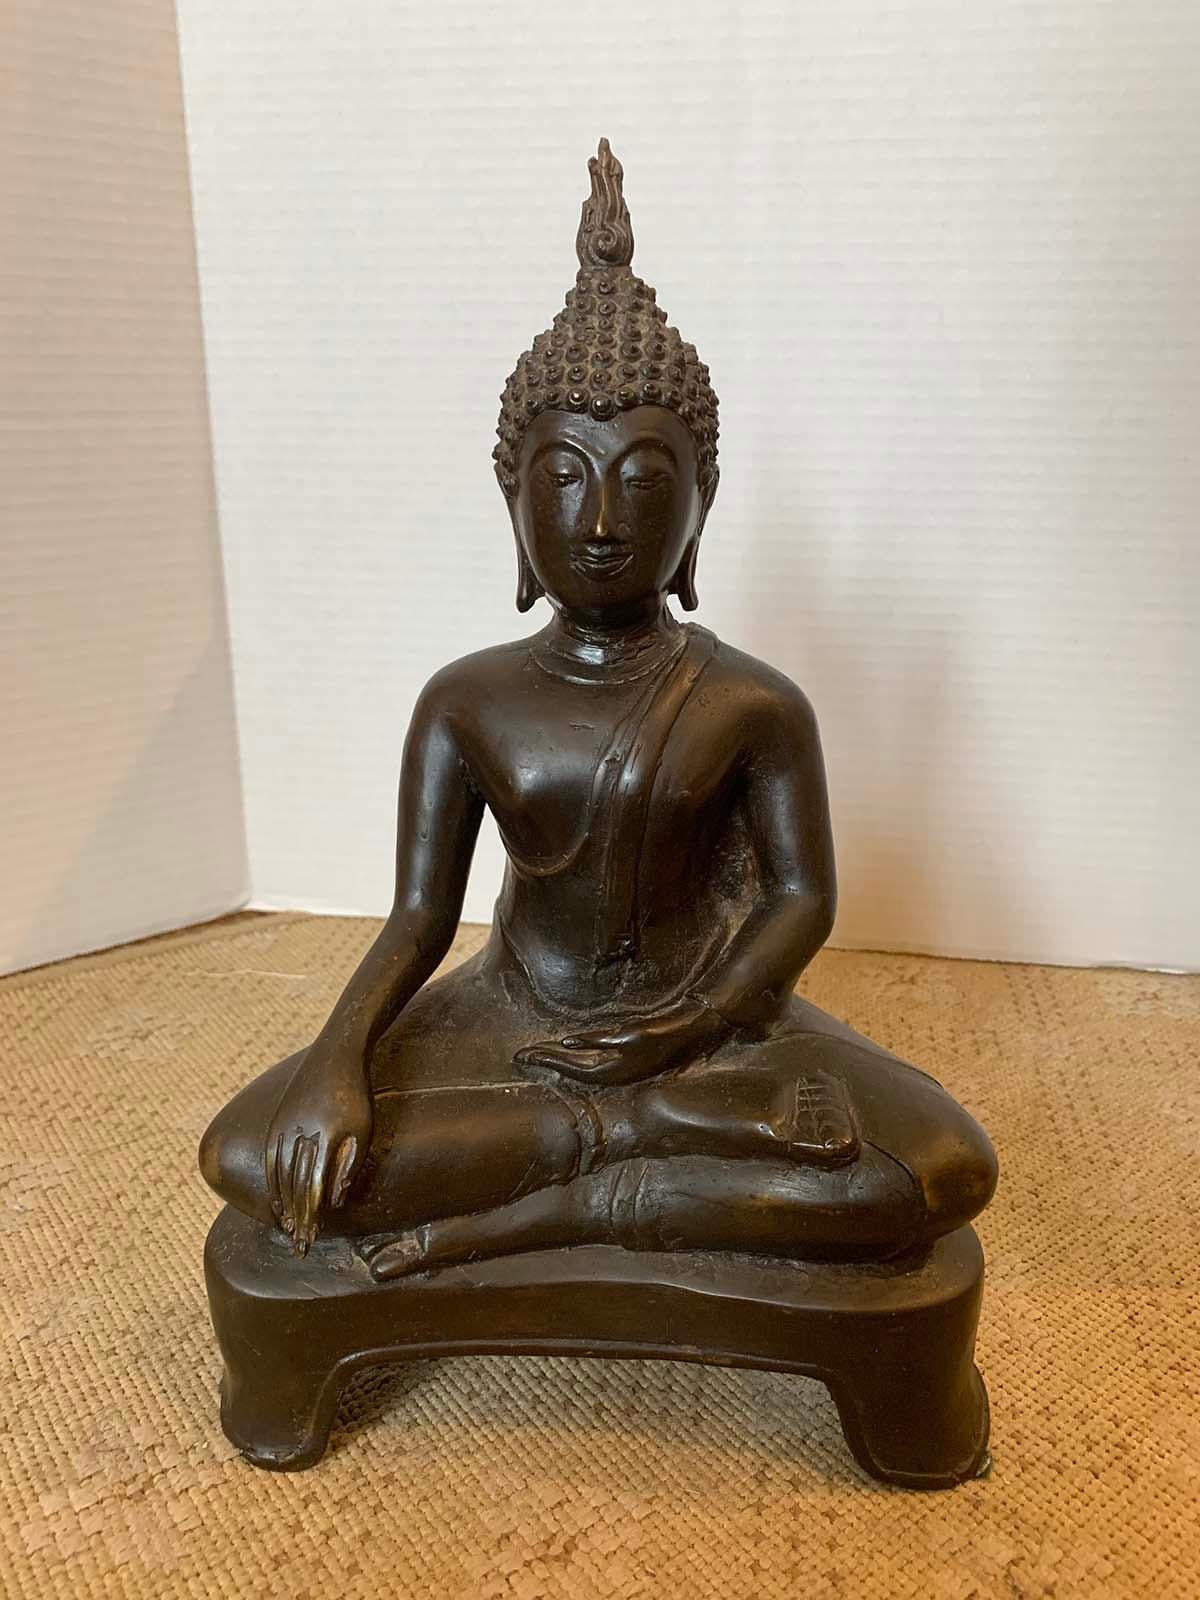 18th-19th century Buddha in Lotus position.